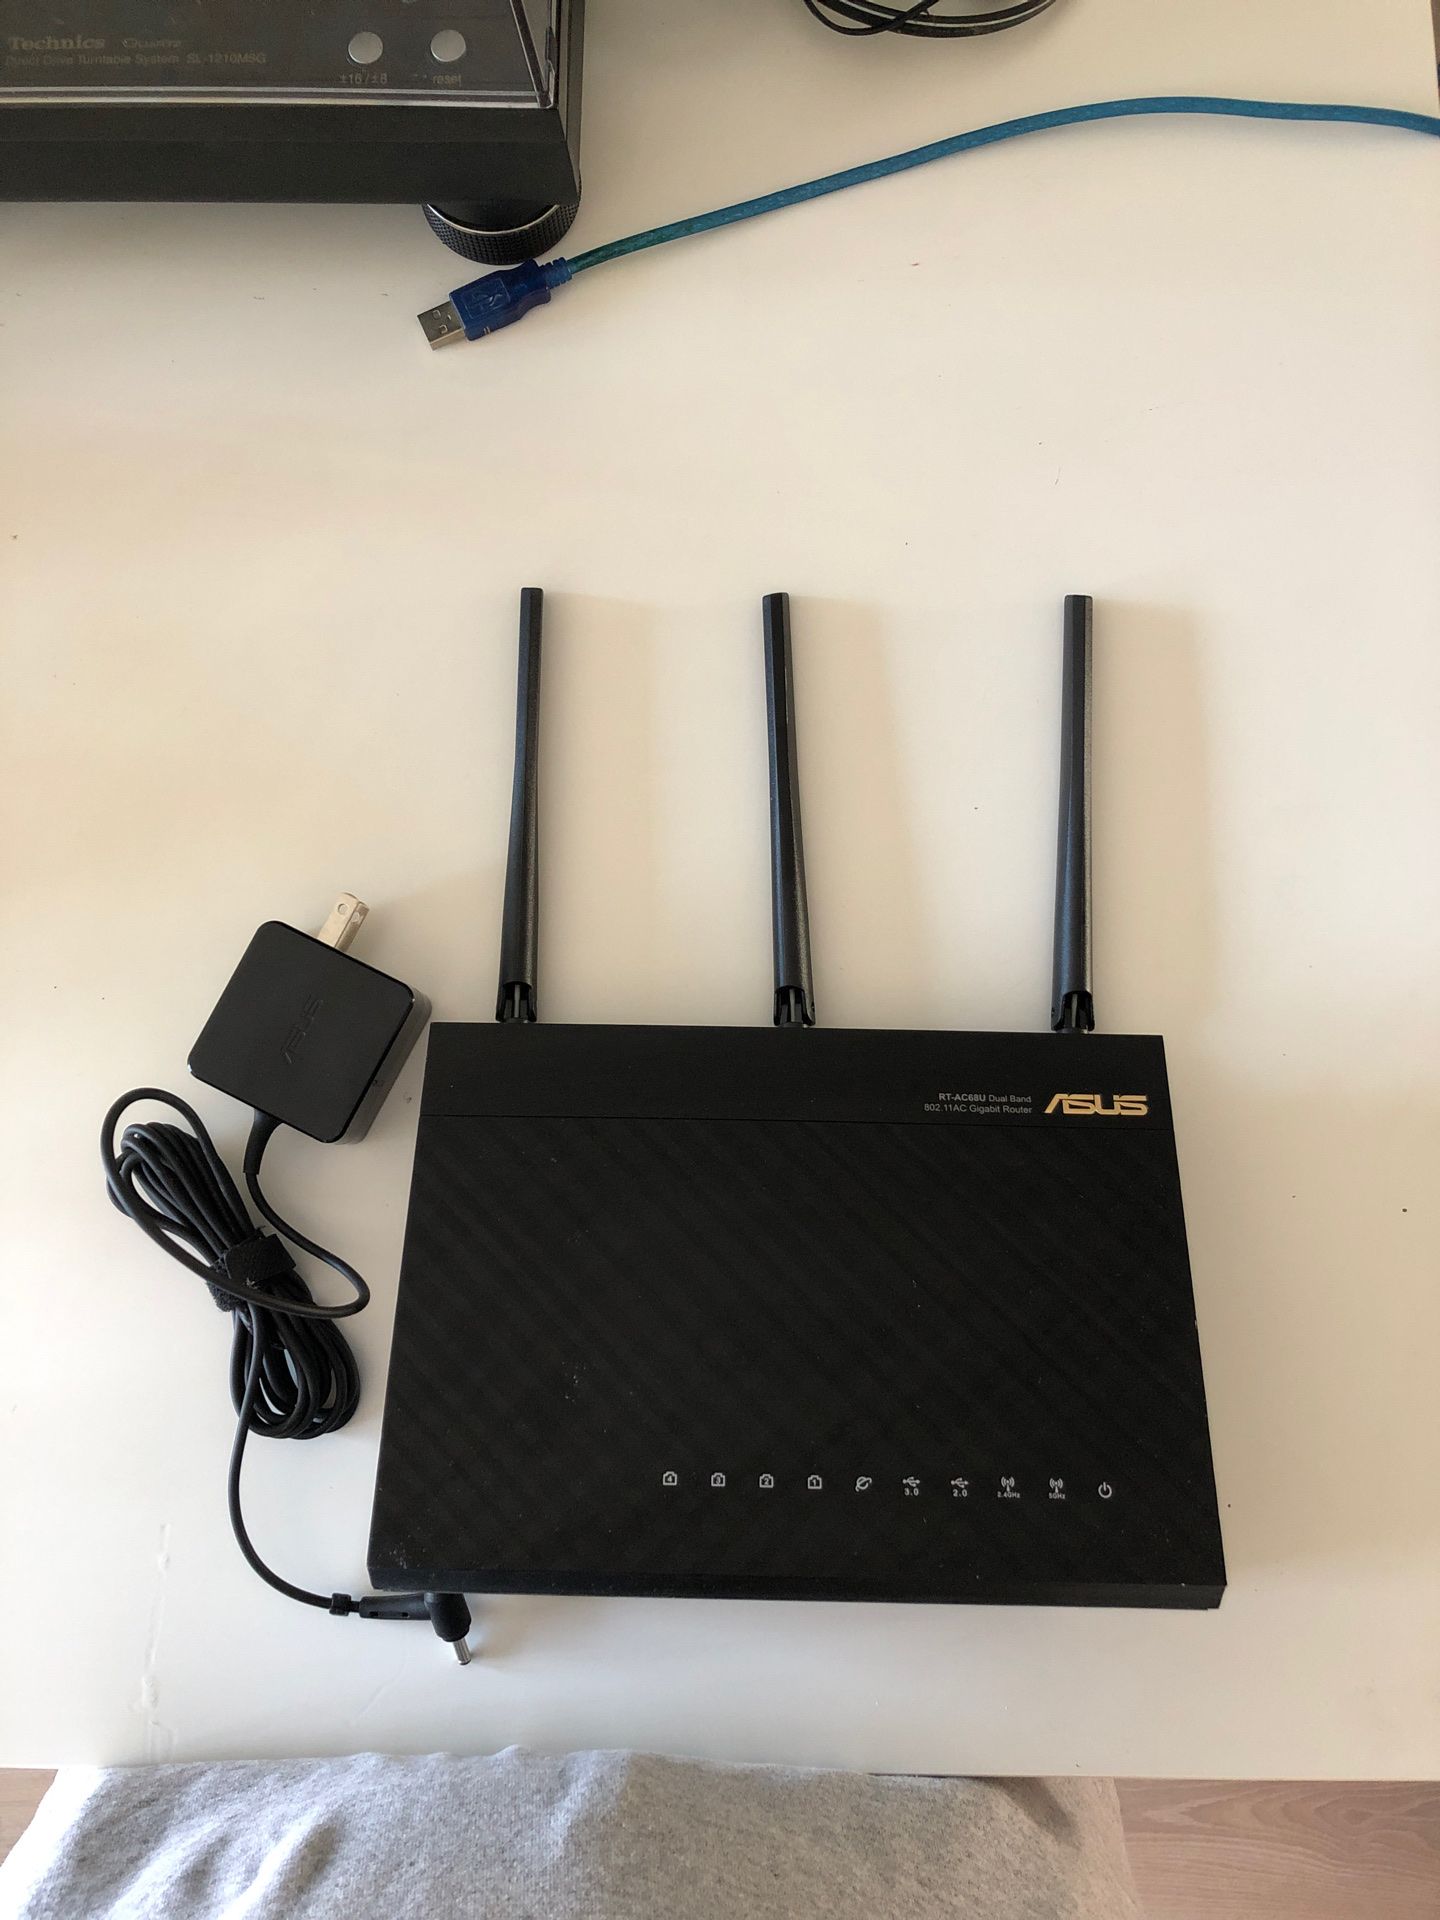 Asus RT-AC68U Dual Band Gigabit Router